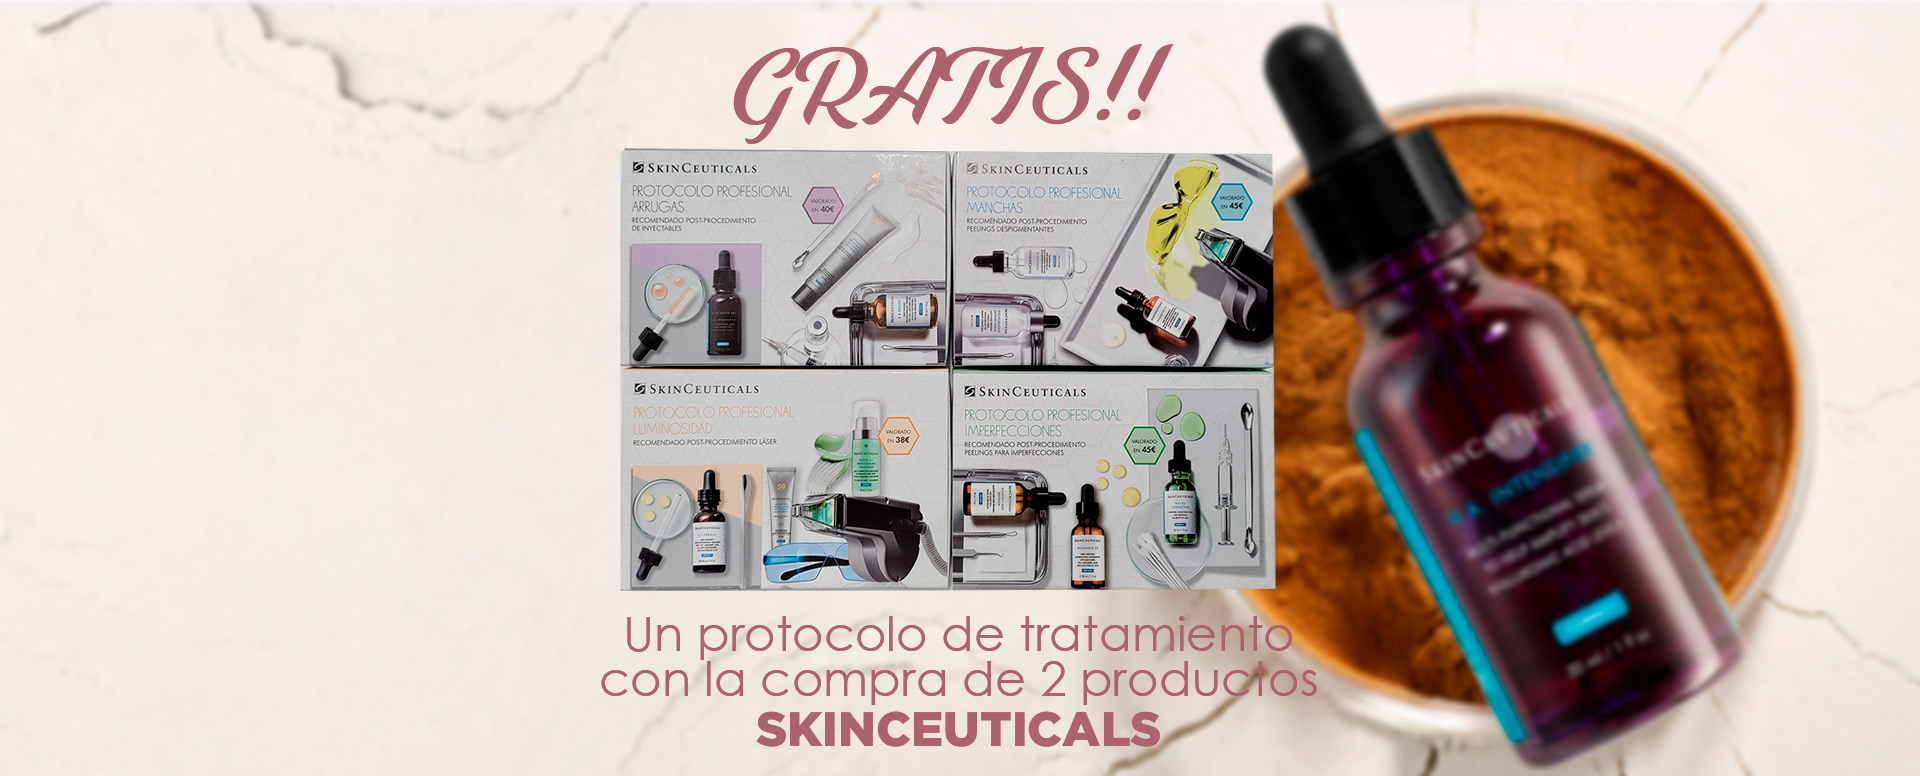 Protocolos-skinceuticals-GU.jpg